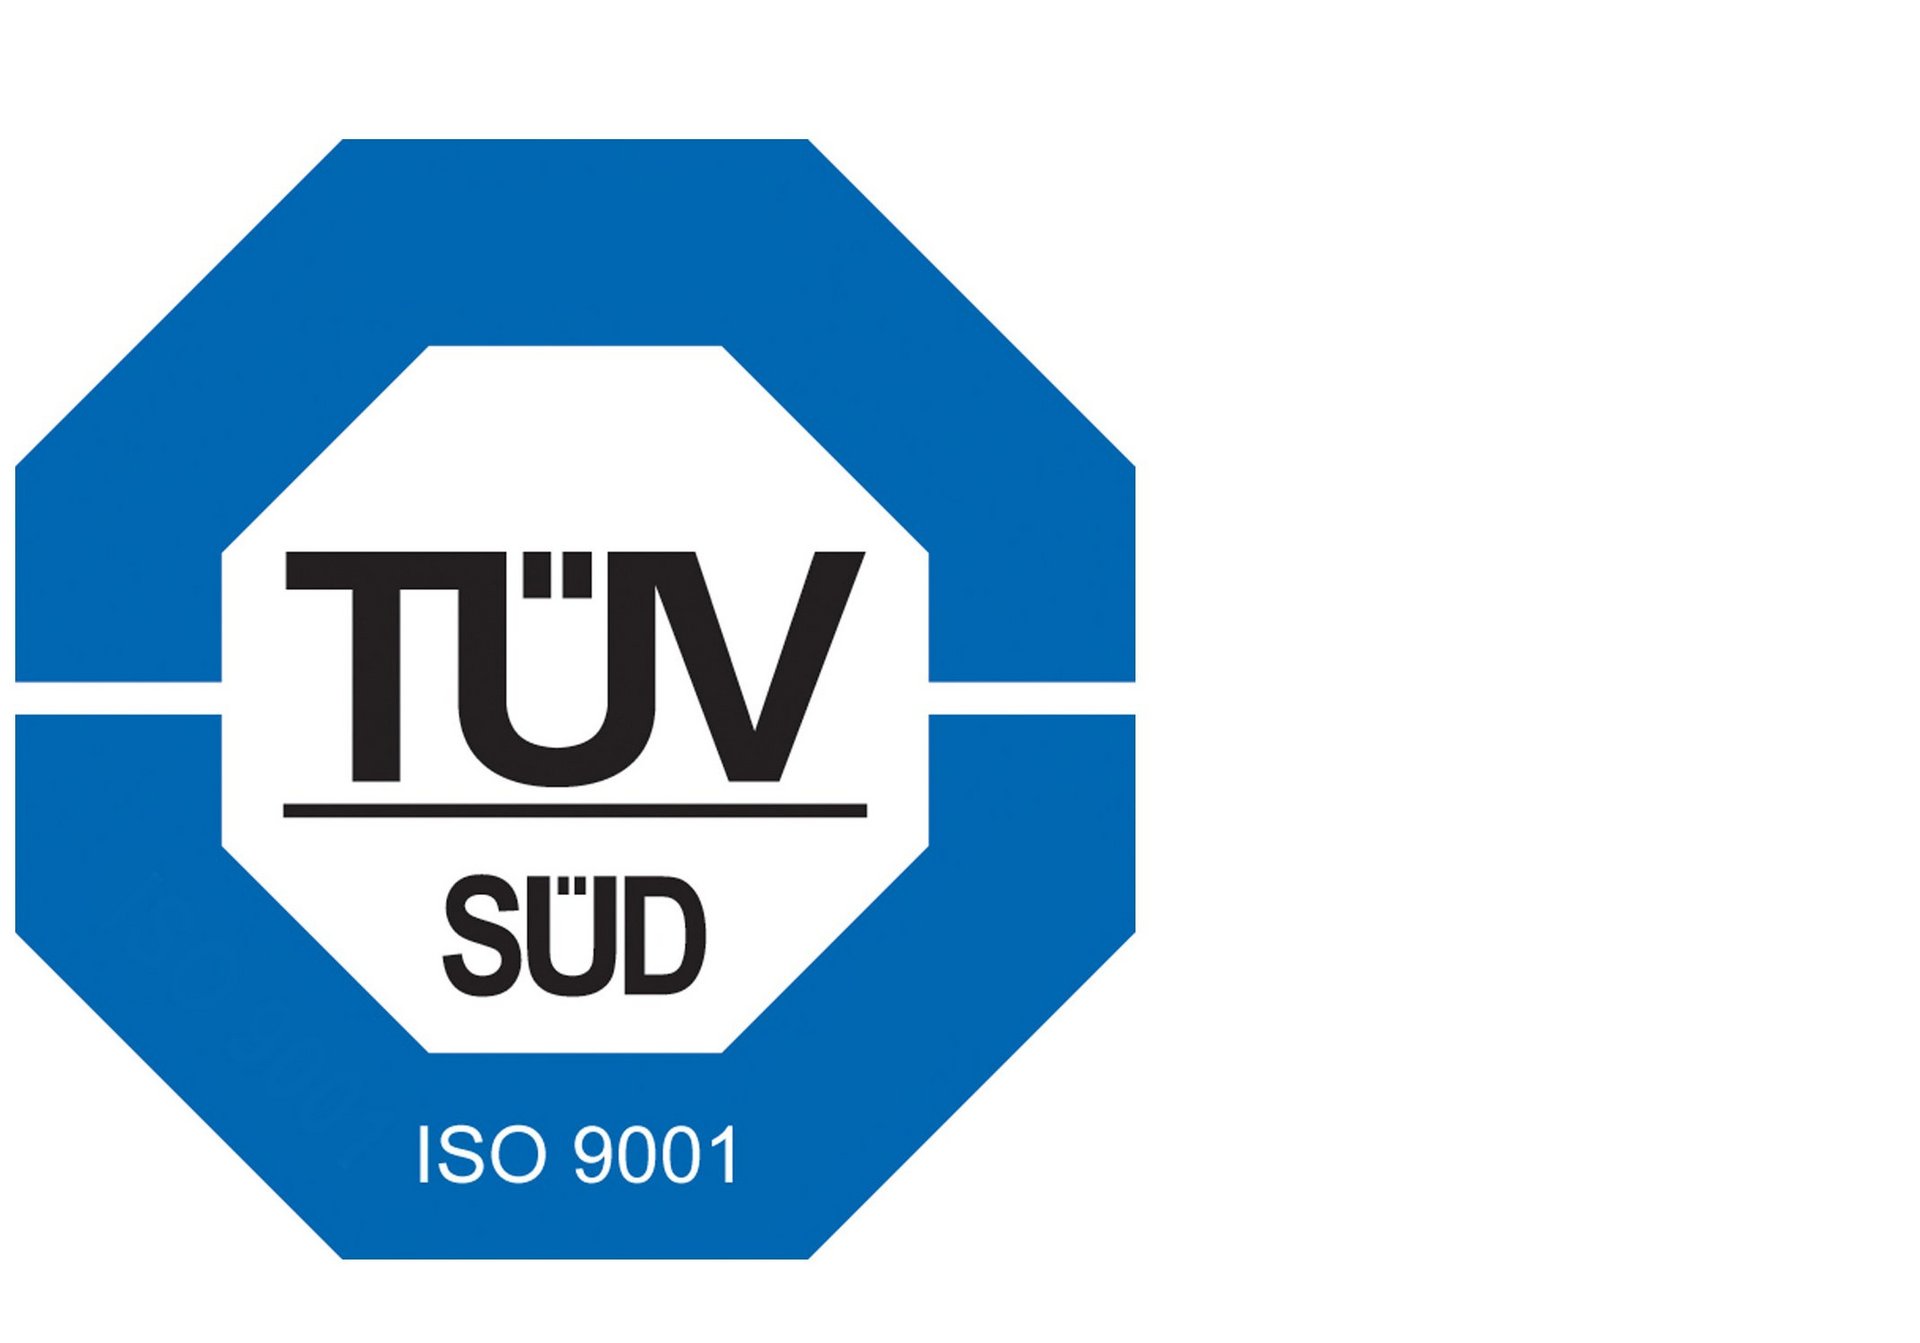 TUEV SUED Logo ISO 9001